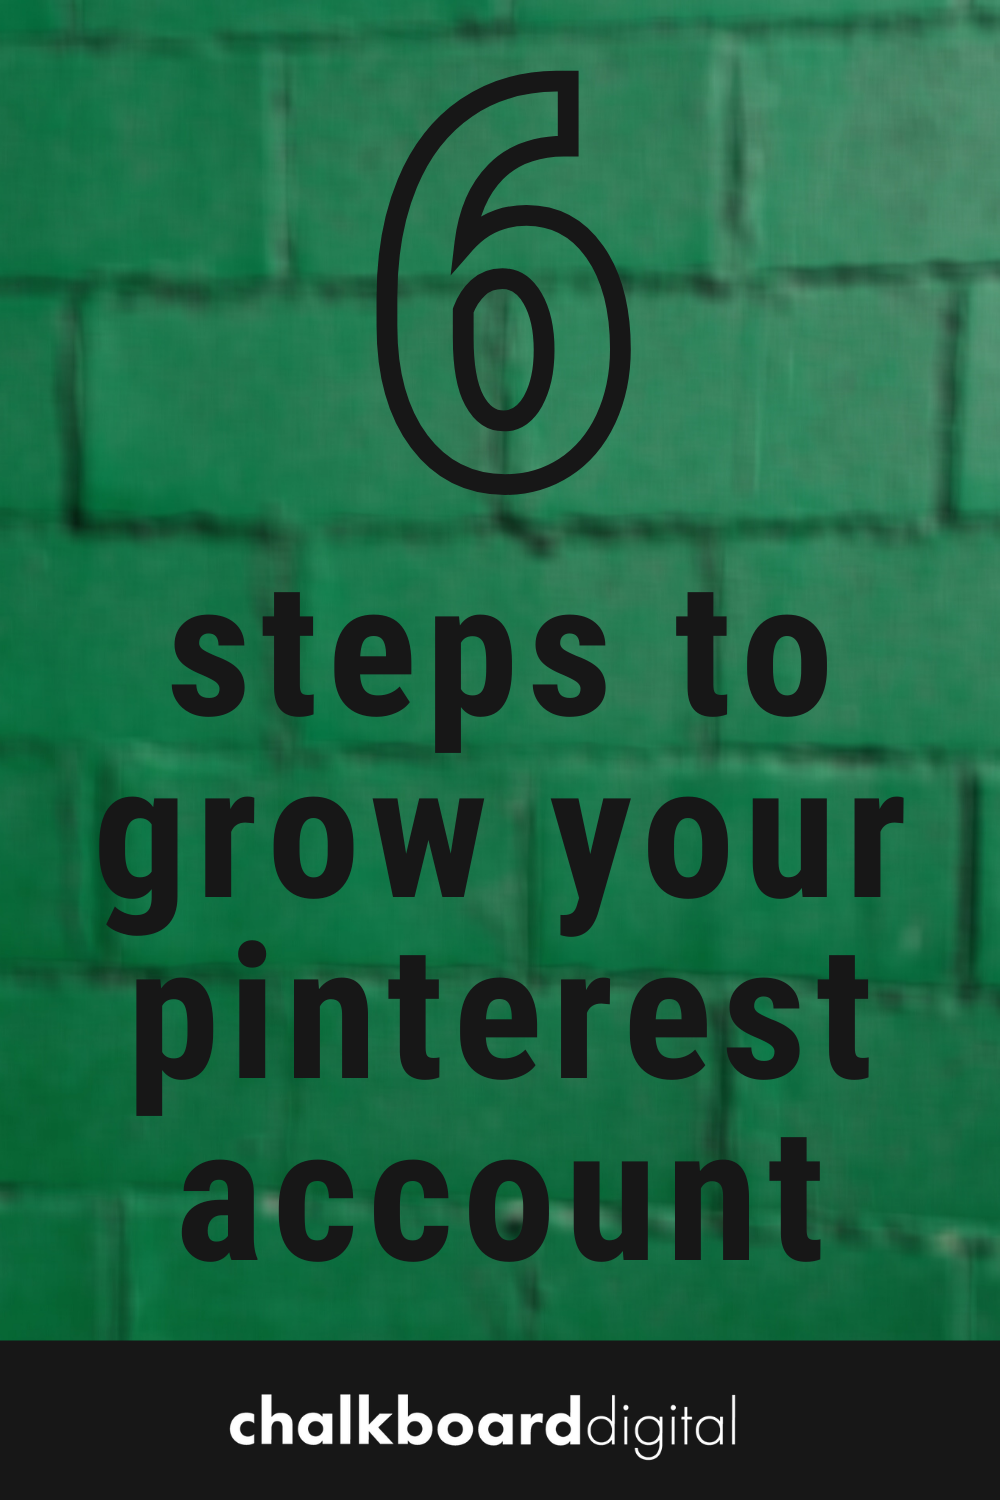 Grow your Pinterest account -  chalkboarddigital (1).png